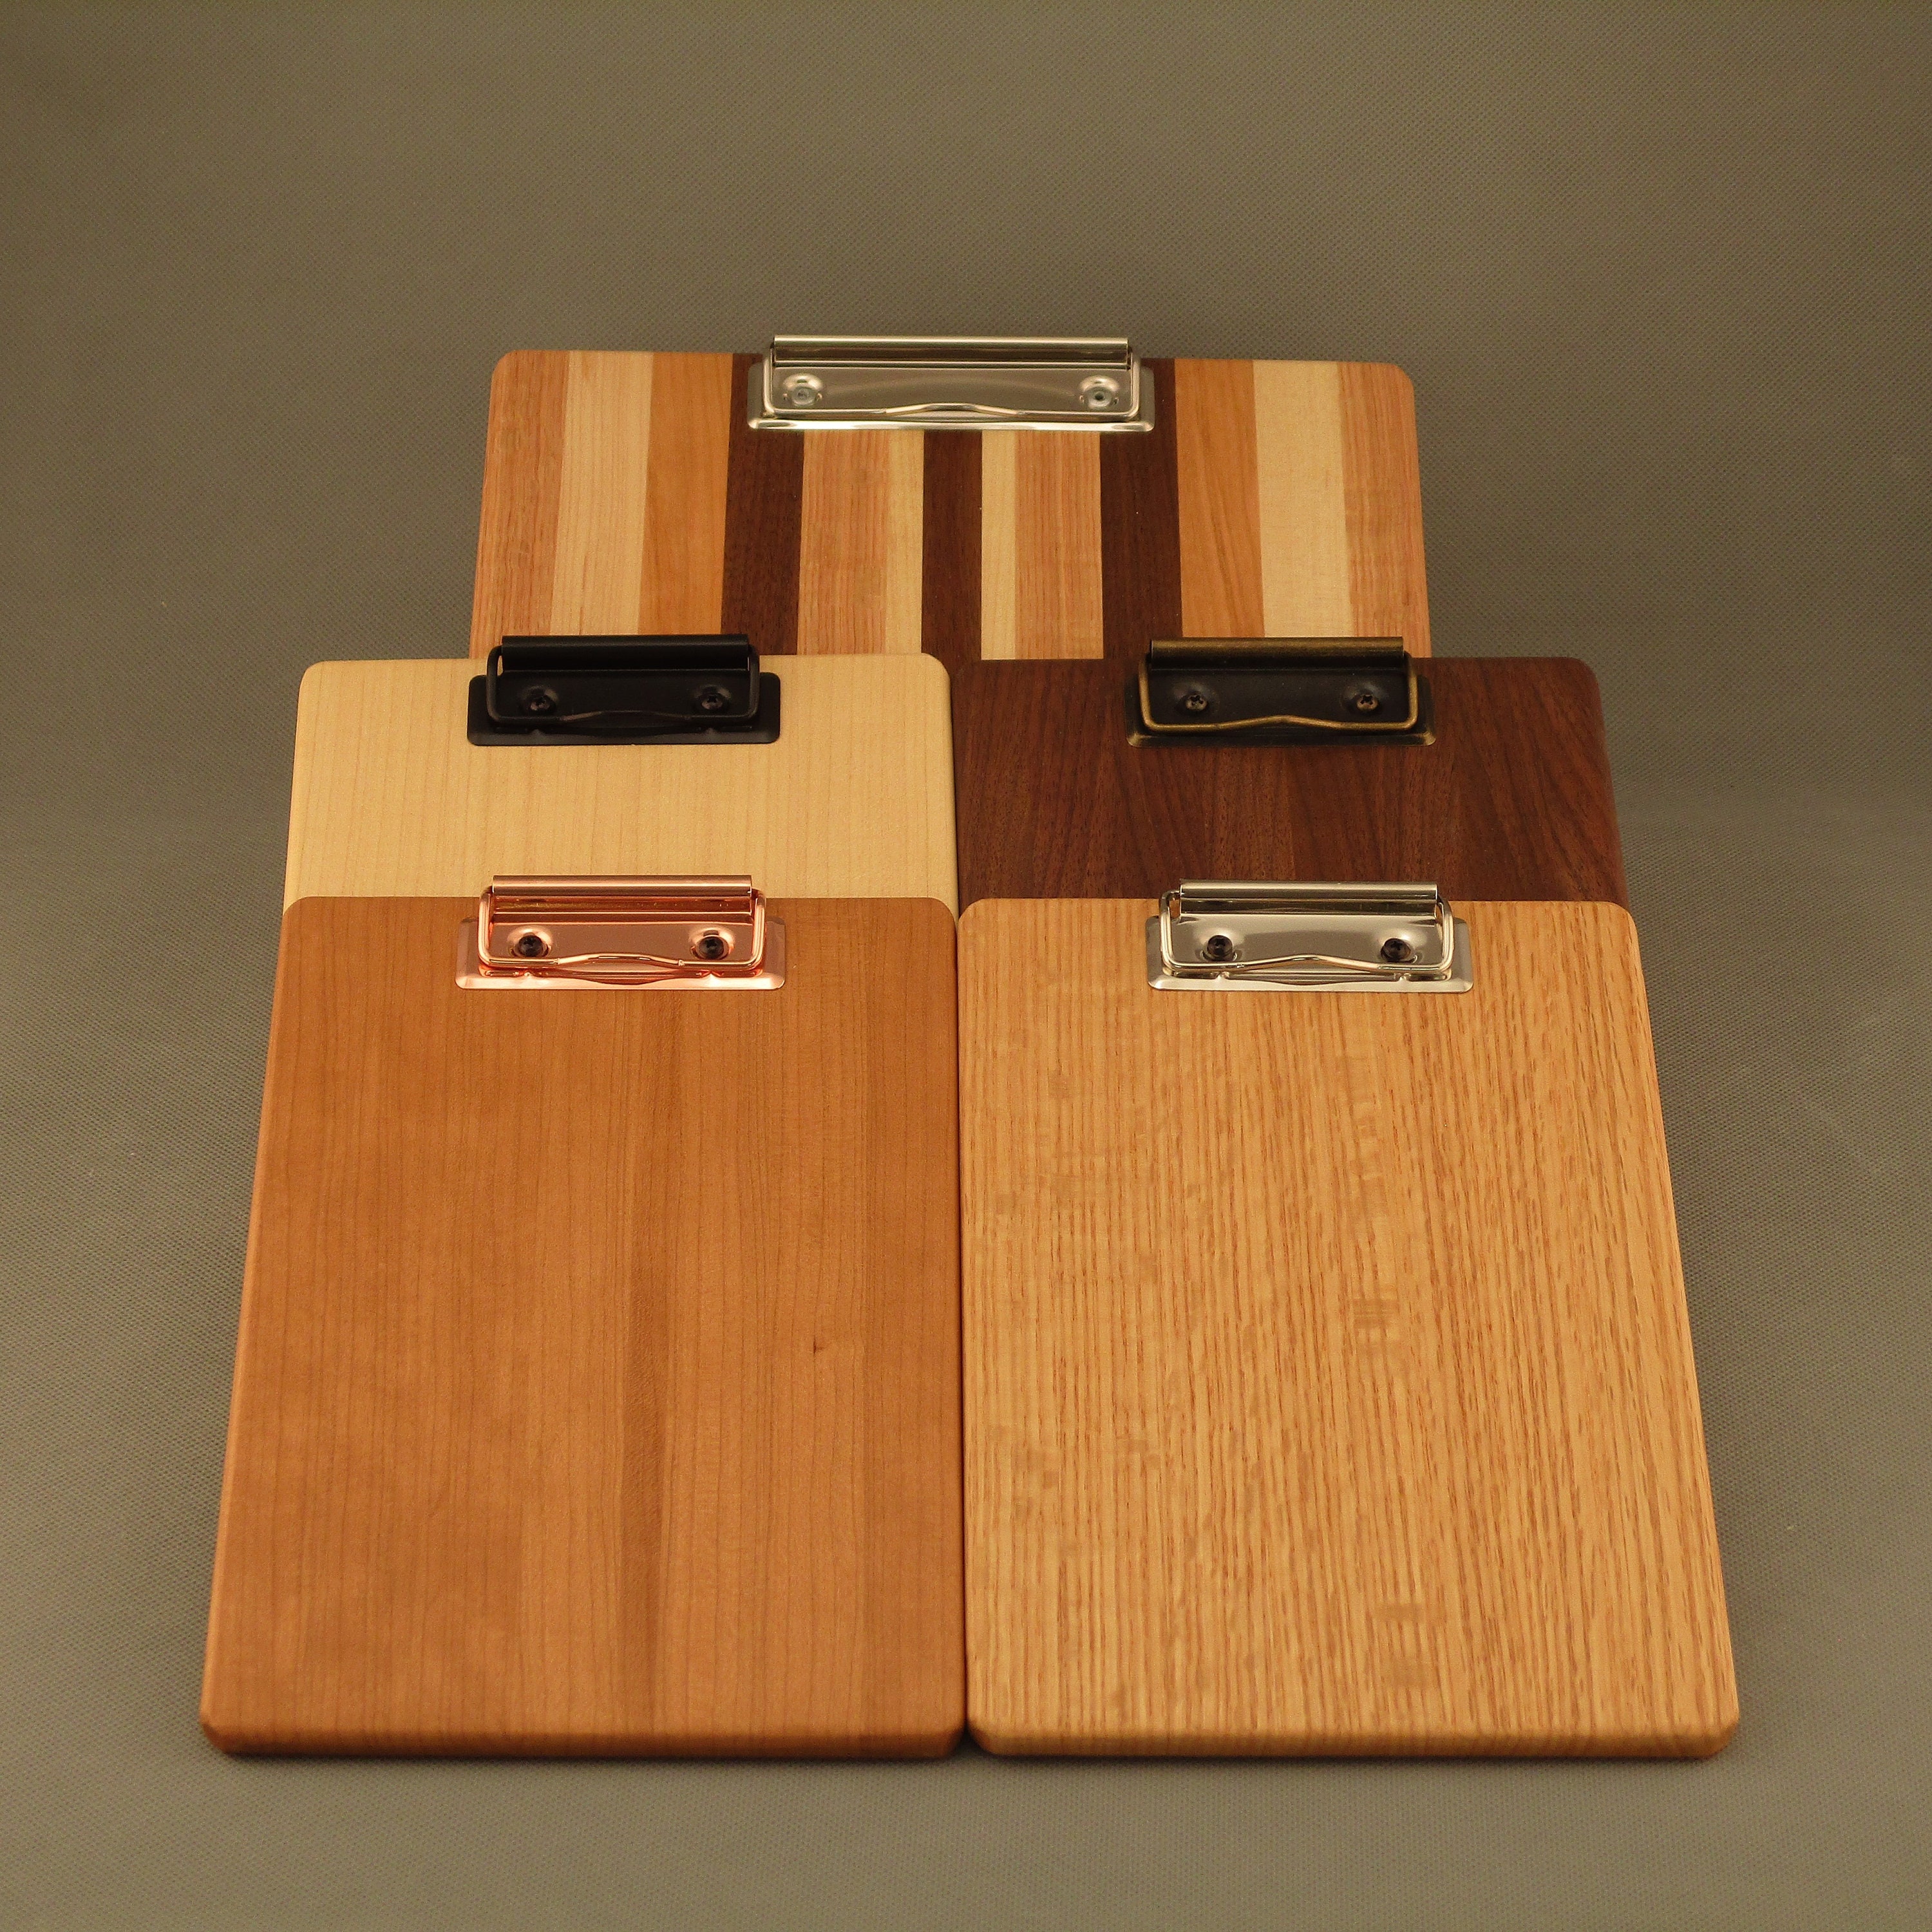 Handmade Walnut Wood Clipboard with Adjustable Base Set - Durable